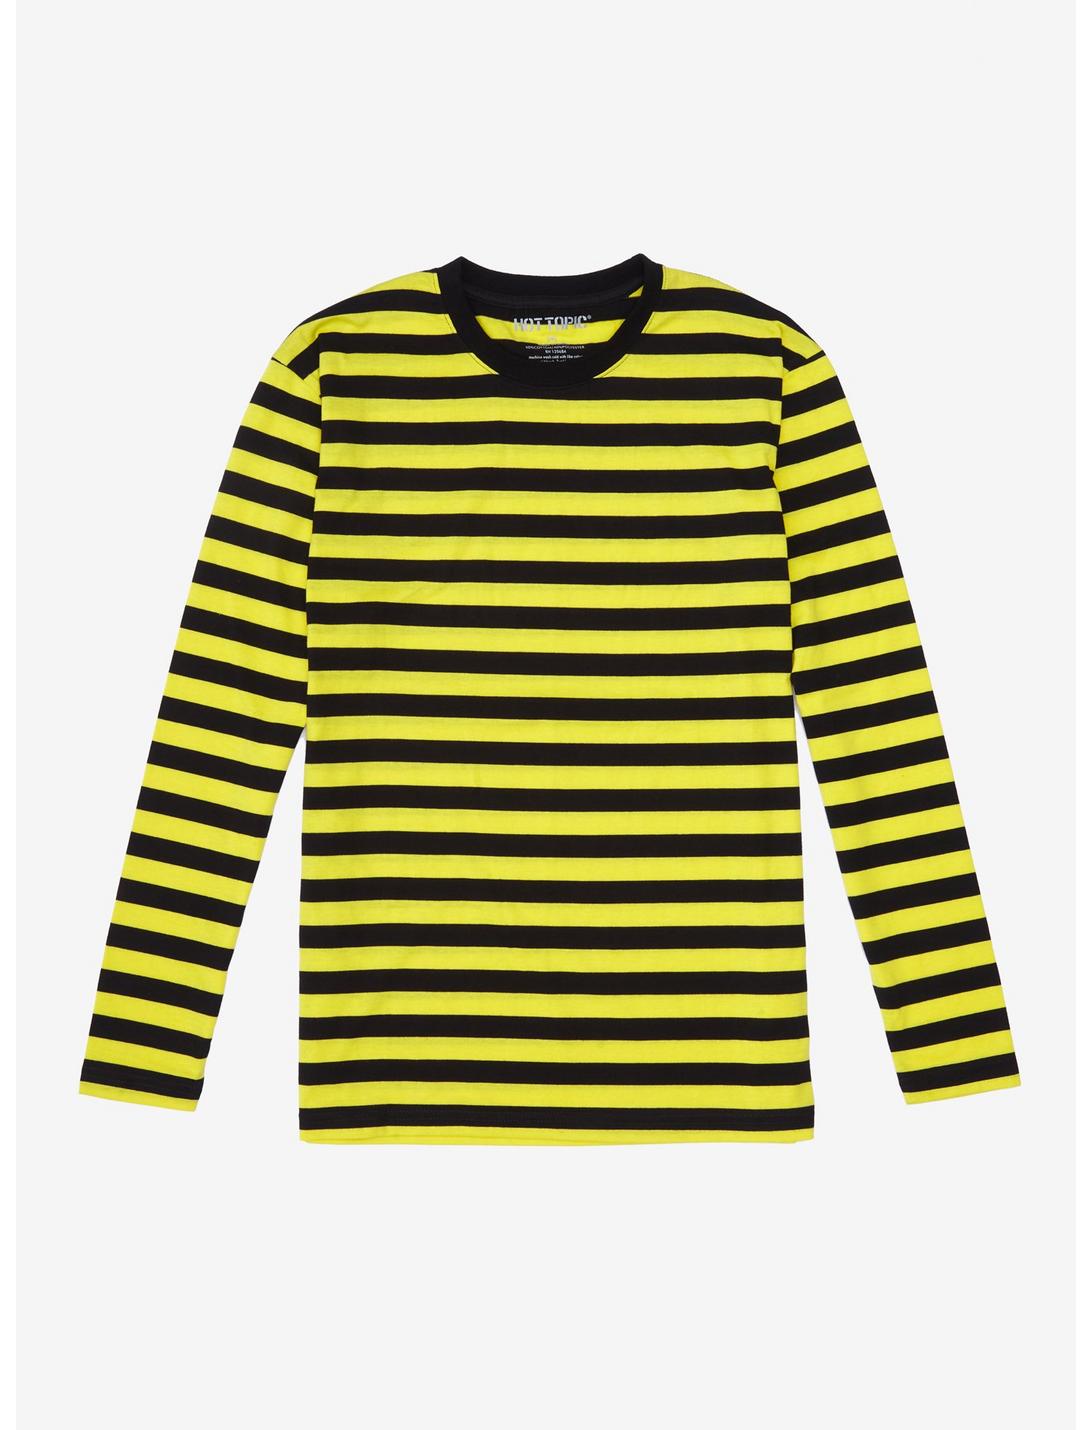 Yellow & Black Stripe Long-Sleeve T-Shirt, STRIPE - YELLOW, hi-res